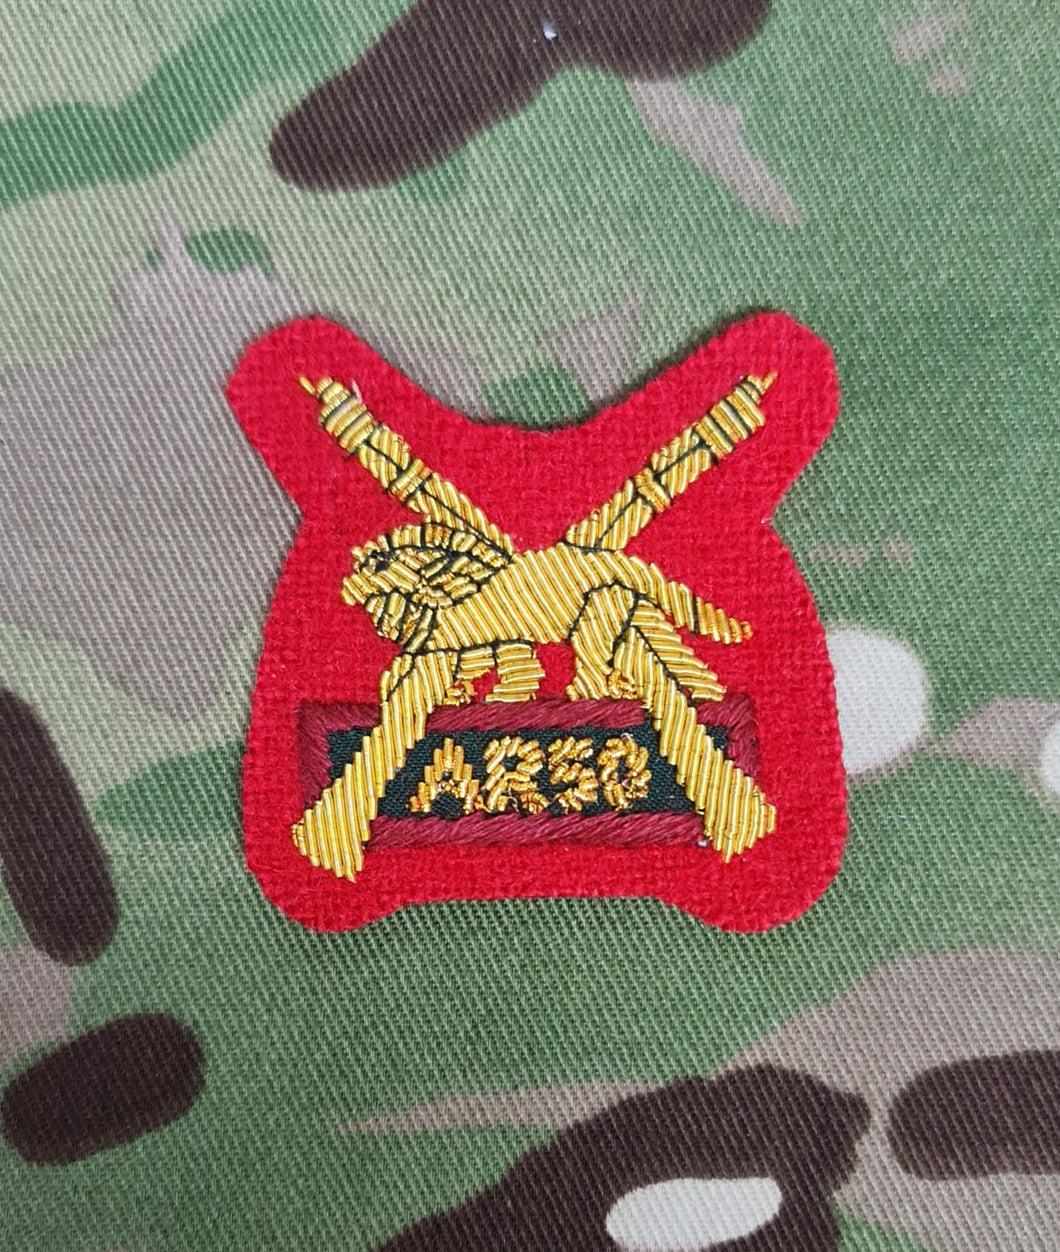 Bisley AR50 shooting qualification Mess Dress Badge Scarlet